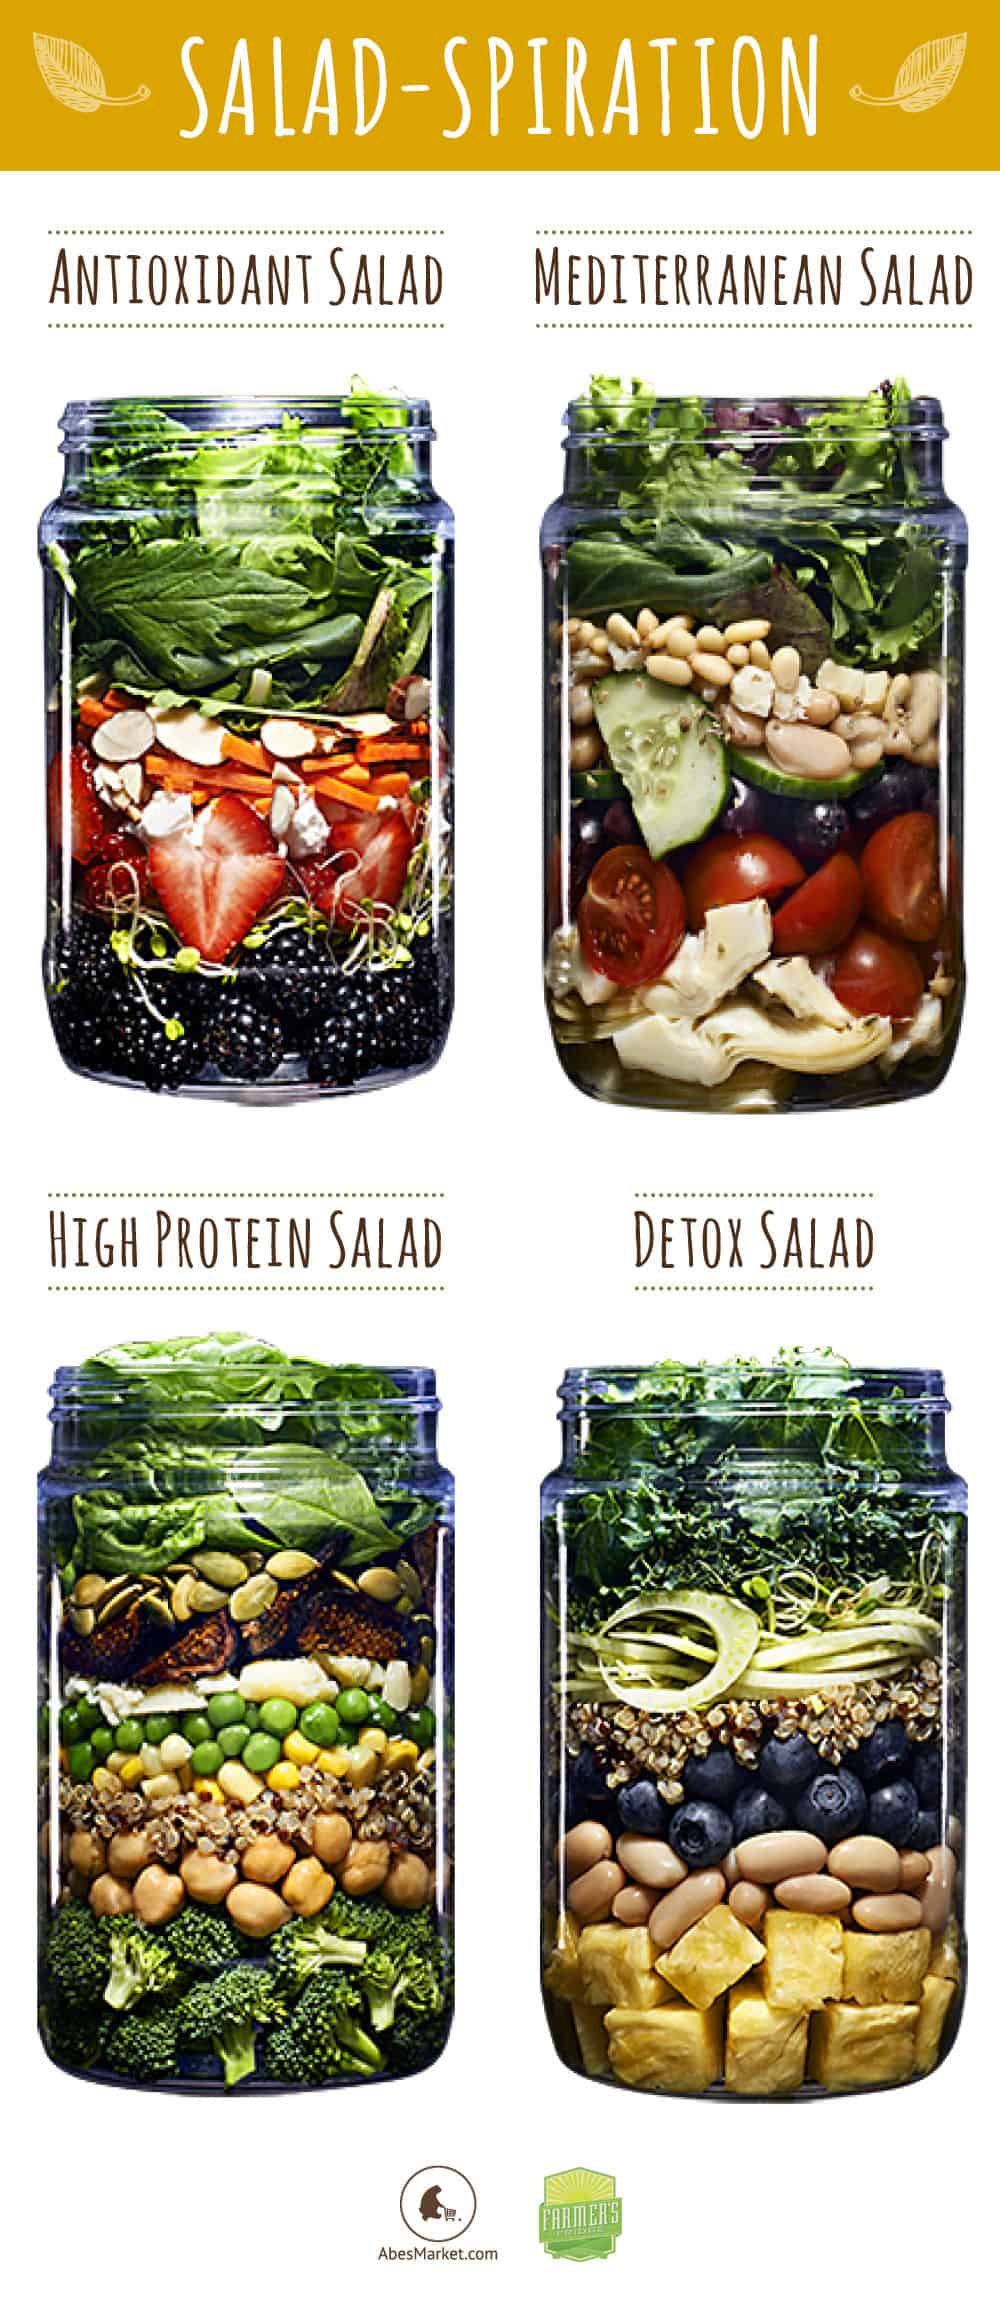 30 Mason Jar Recipes: A Month Worth of "Salad in a Jar" Recipes